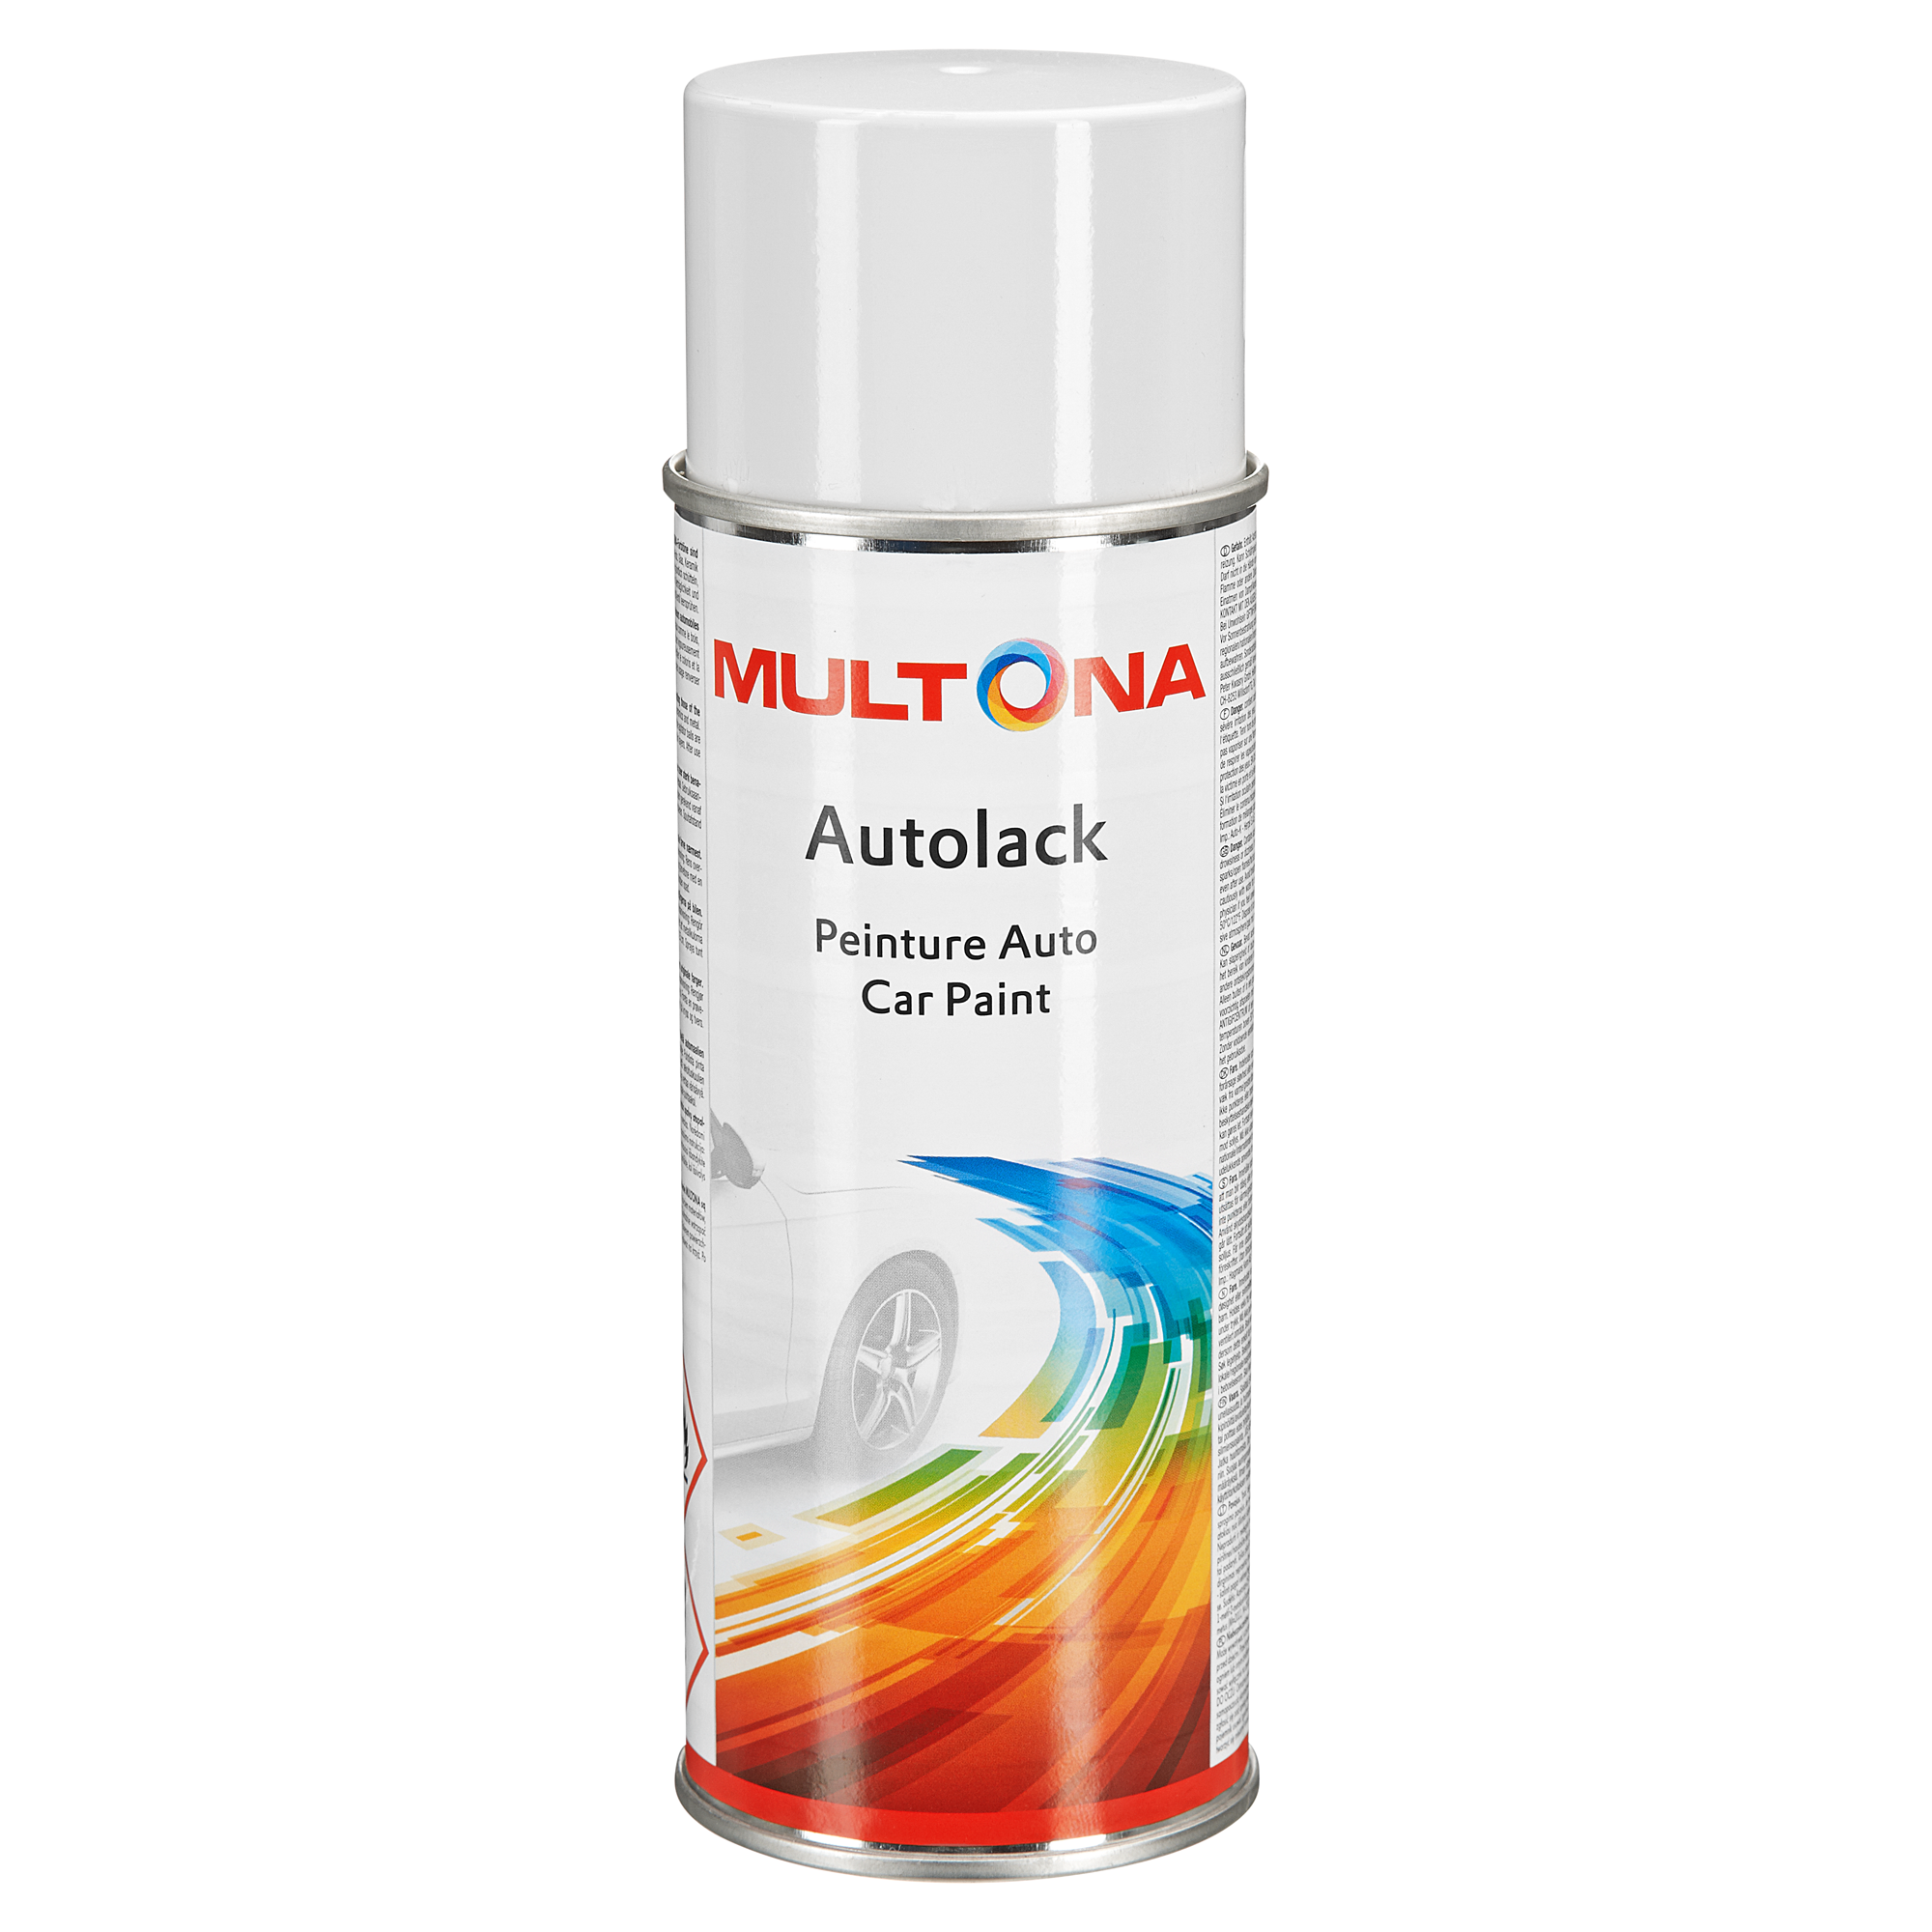 Autolack 002 400 ml + product picture